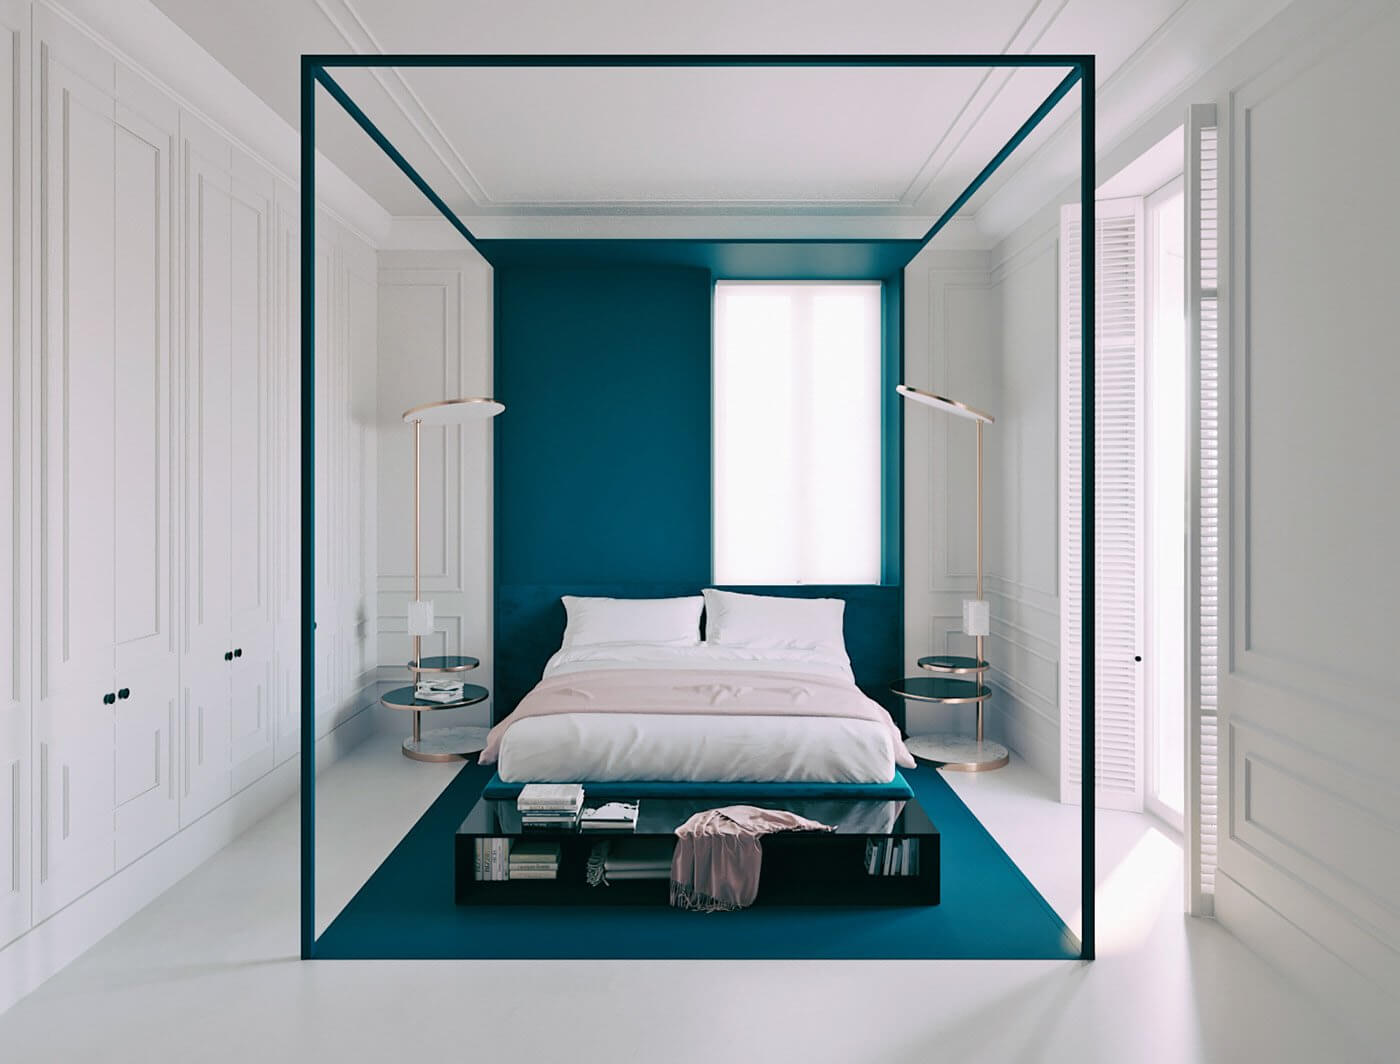 Apartment in Kiev bedroom modern - cgi visualization